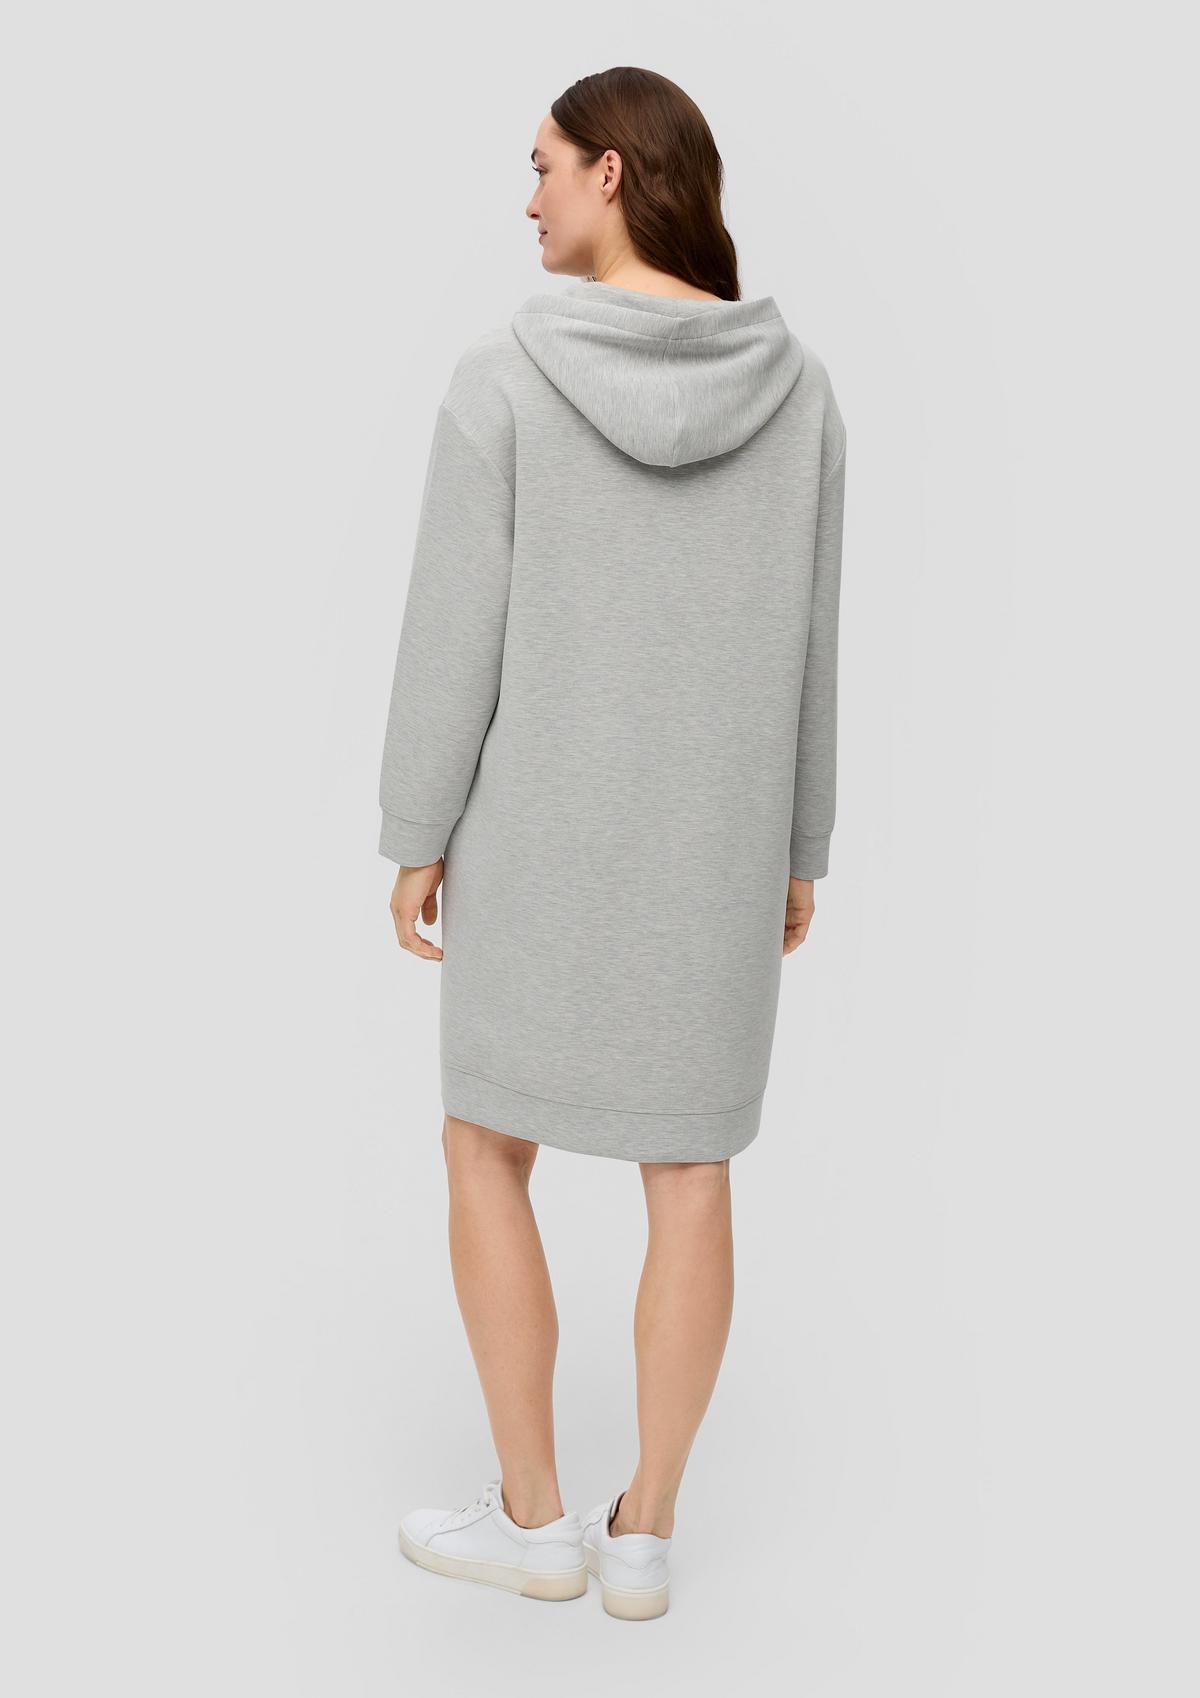 s.Oliver Sweatshirt dress made of a modal blend